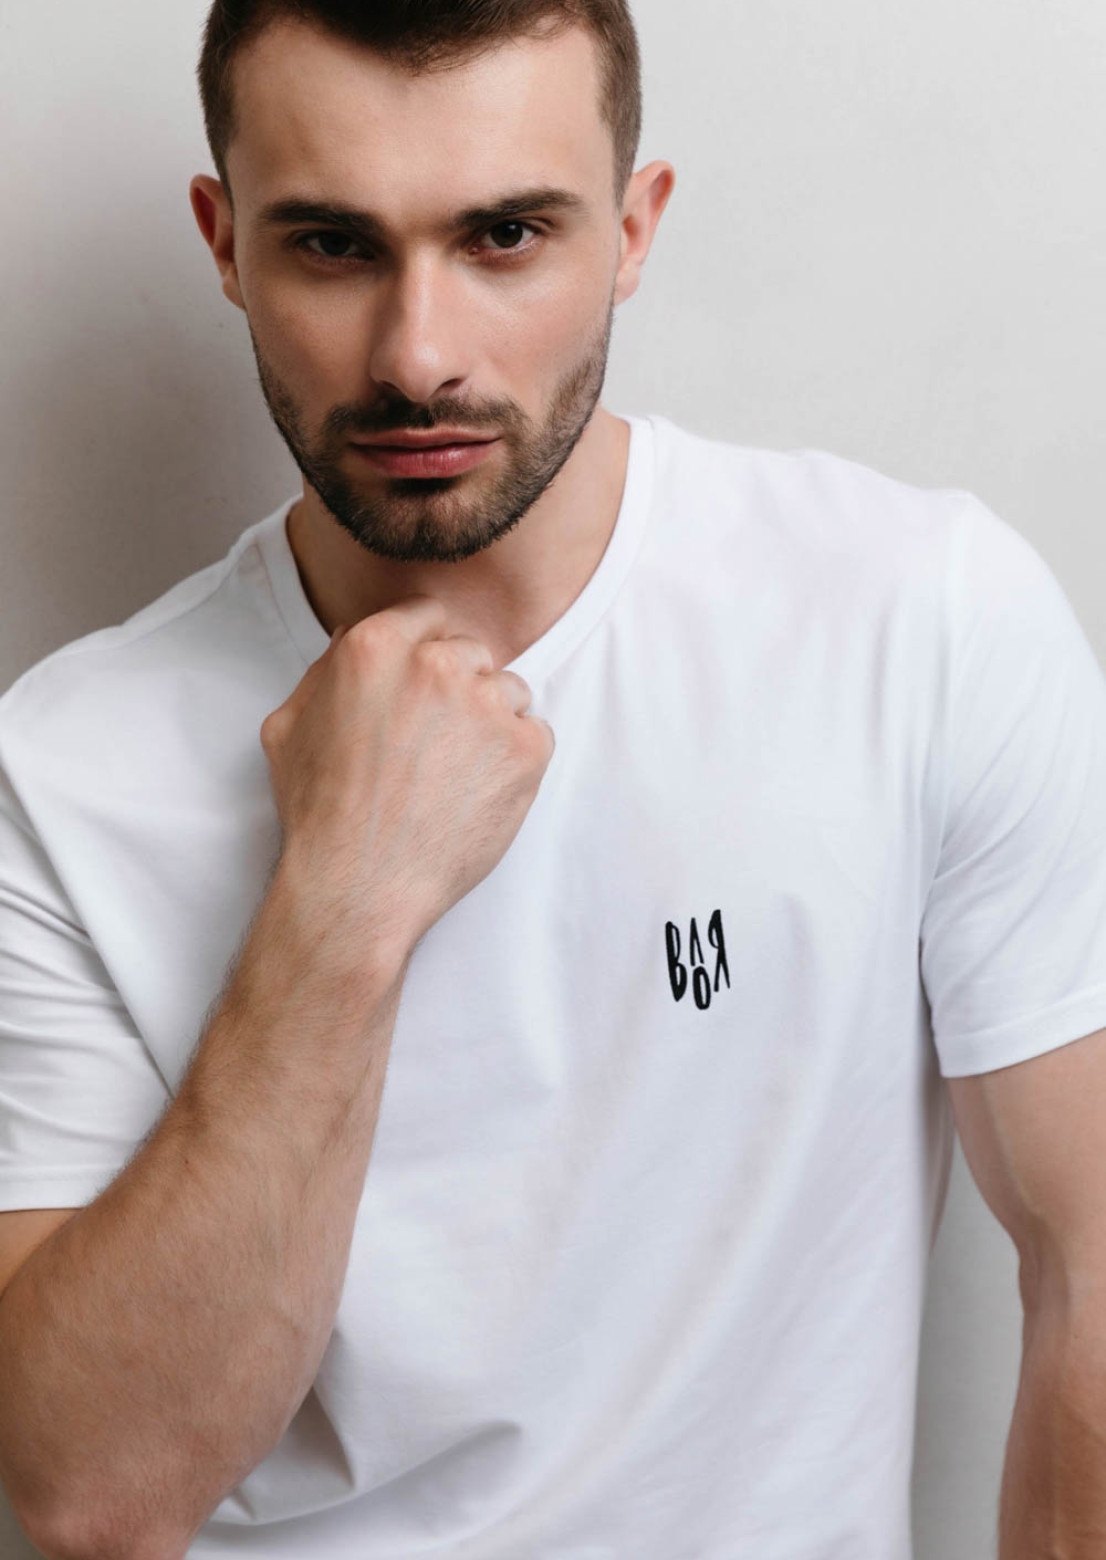 Men's white T-shirt "Воля"